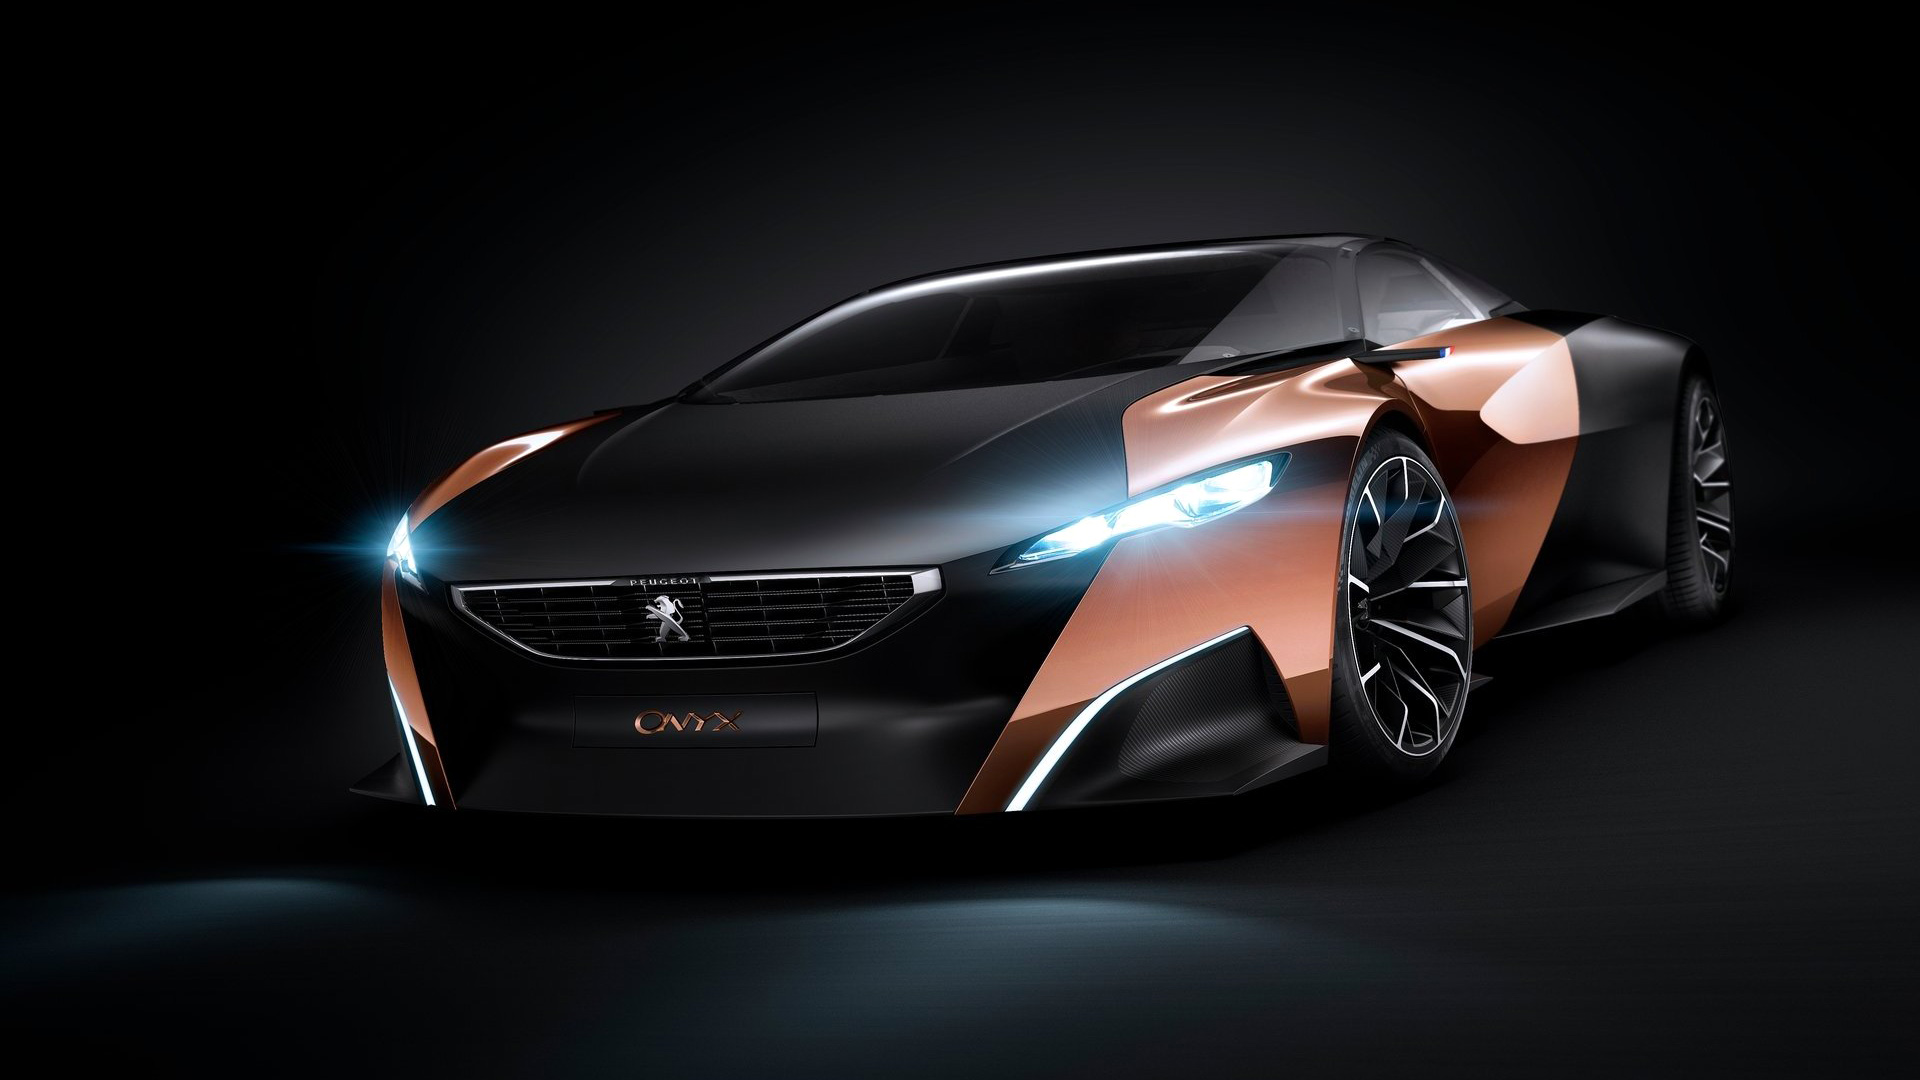  2012 Peugeot Onyx Concept Wallpaper.